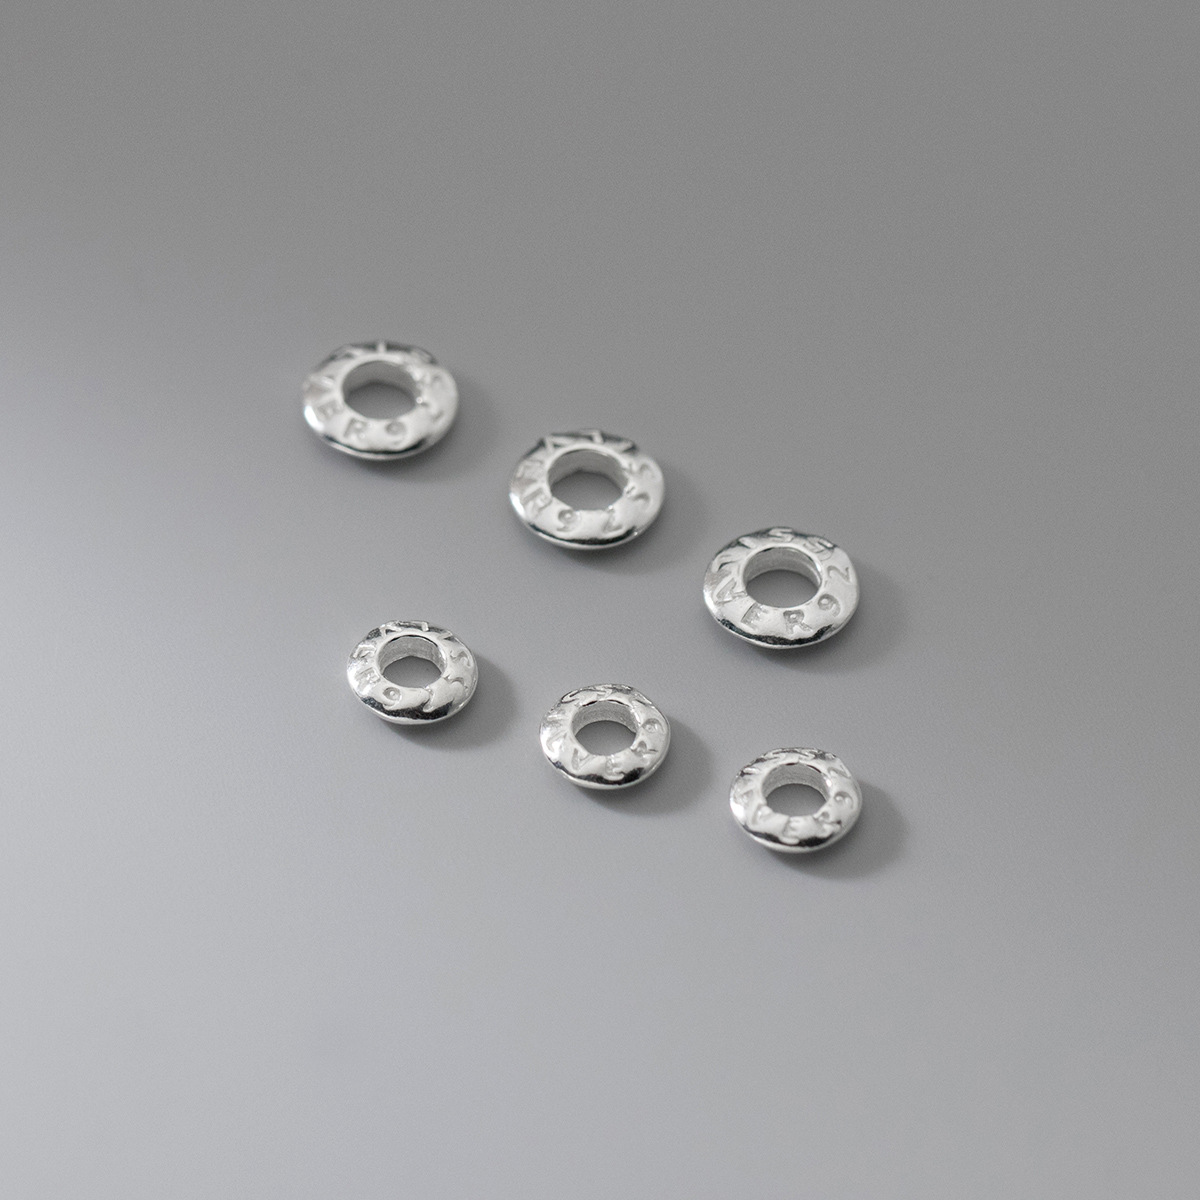 Plain silver, 7 mm in diameter